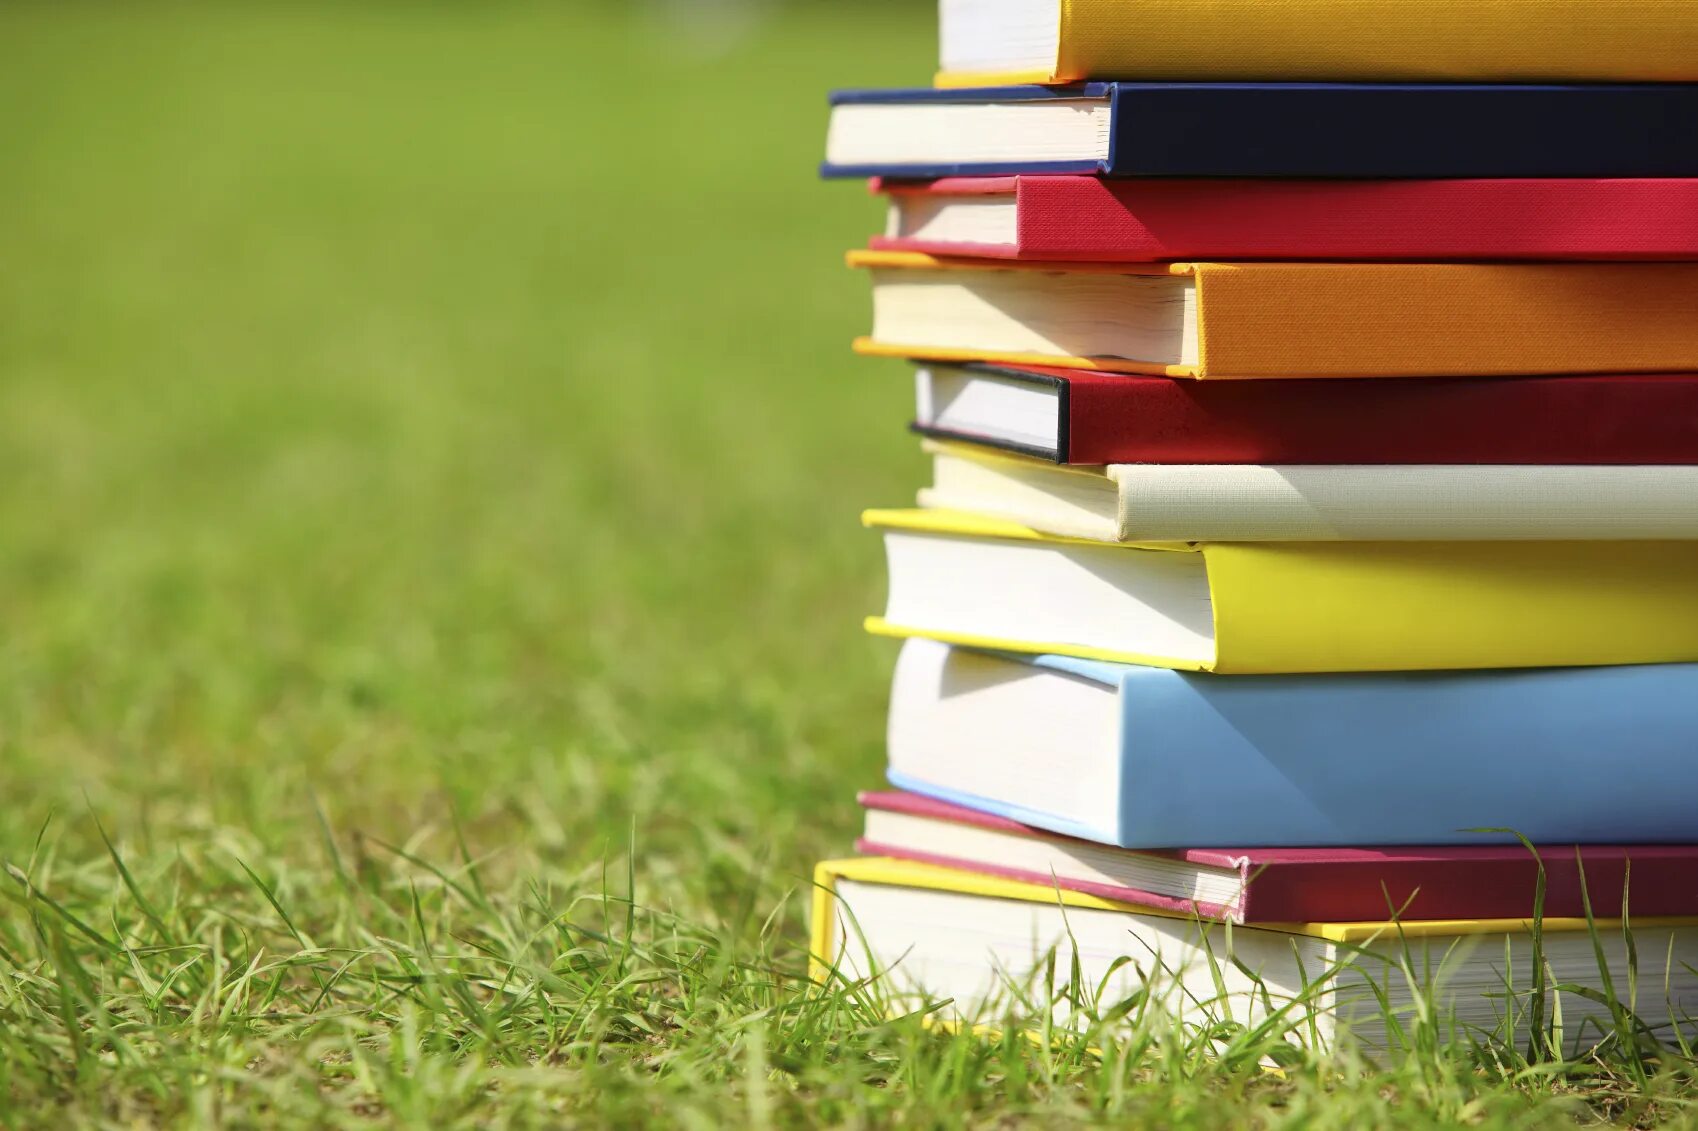 Проект год книги. Стопка книг. Яркие книги. Книга на траве. Украинские учебники.